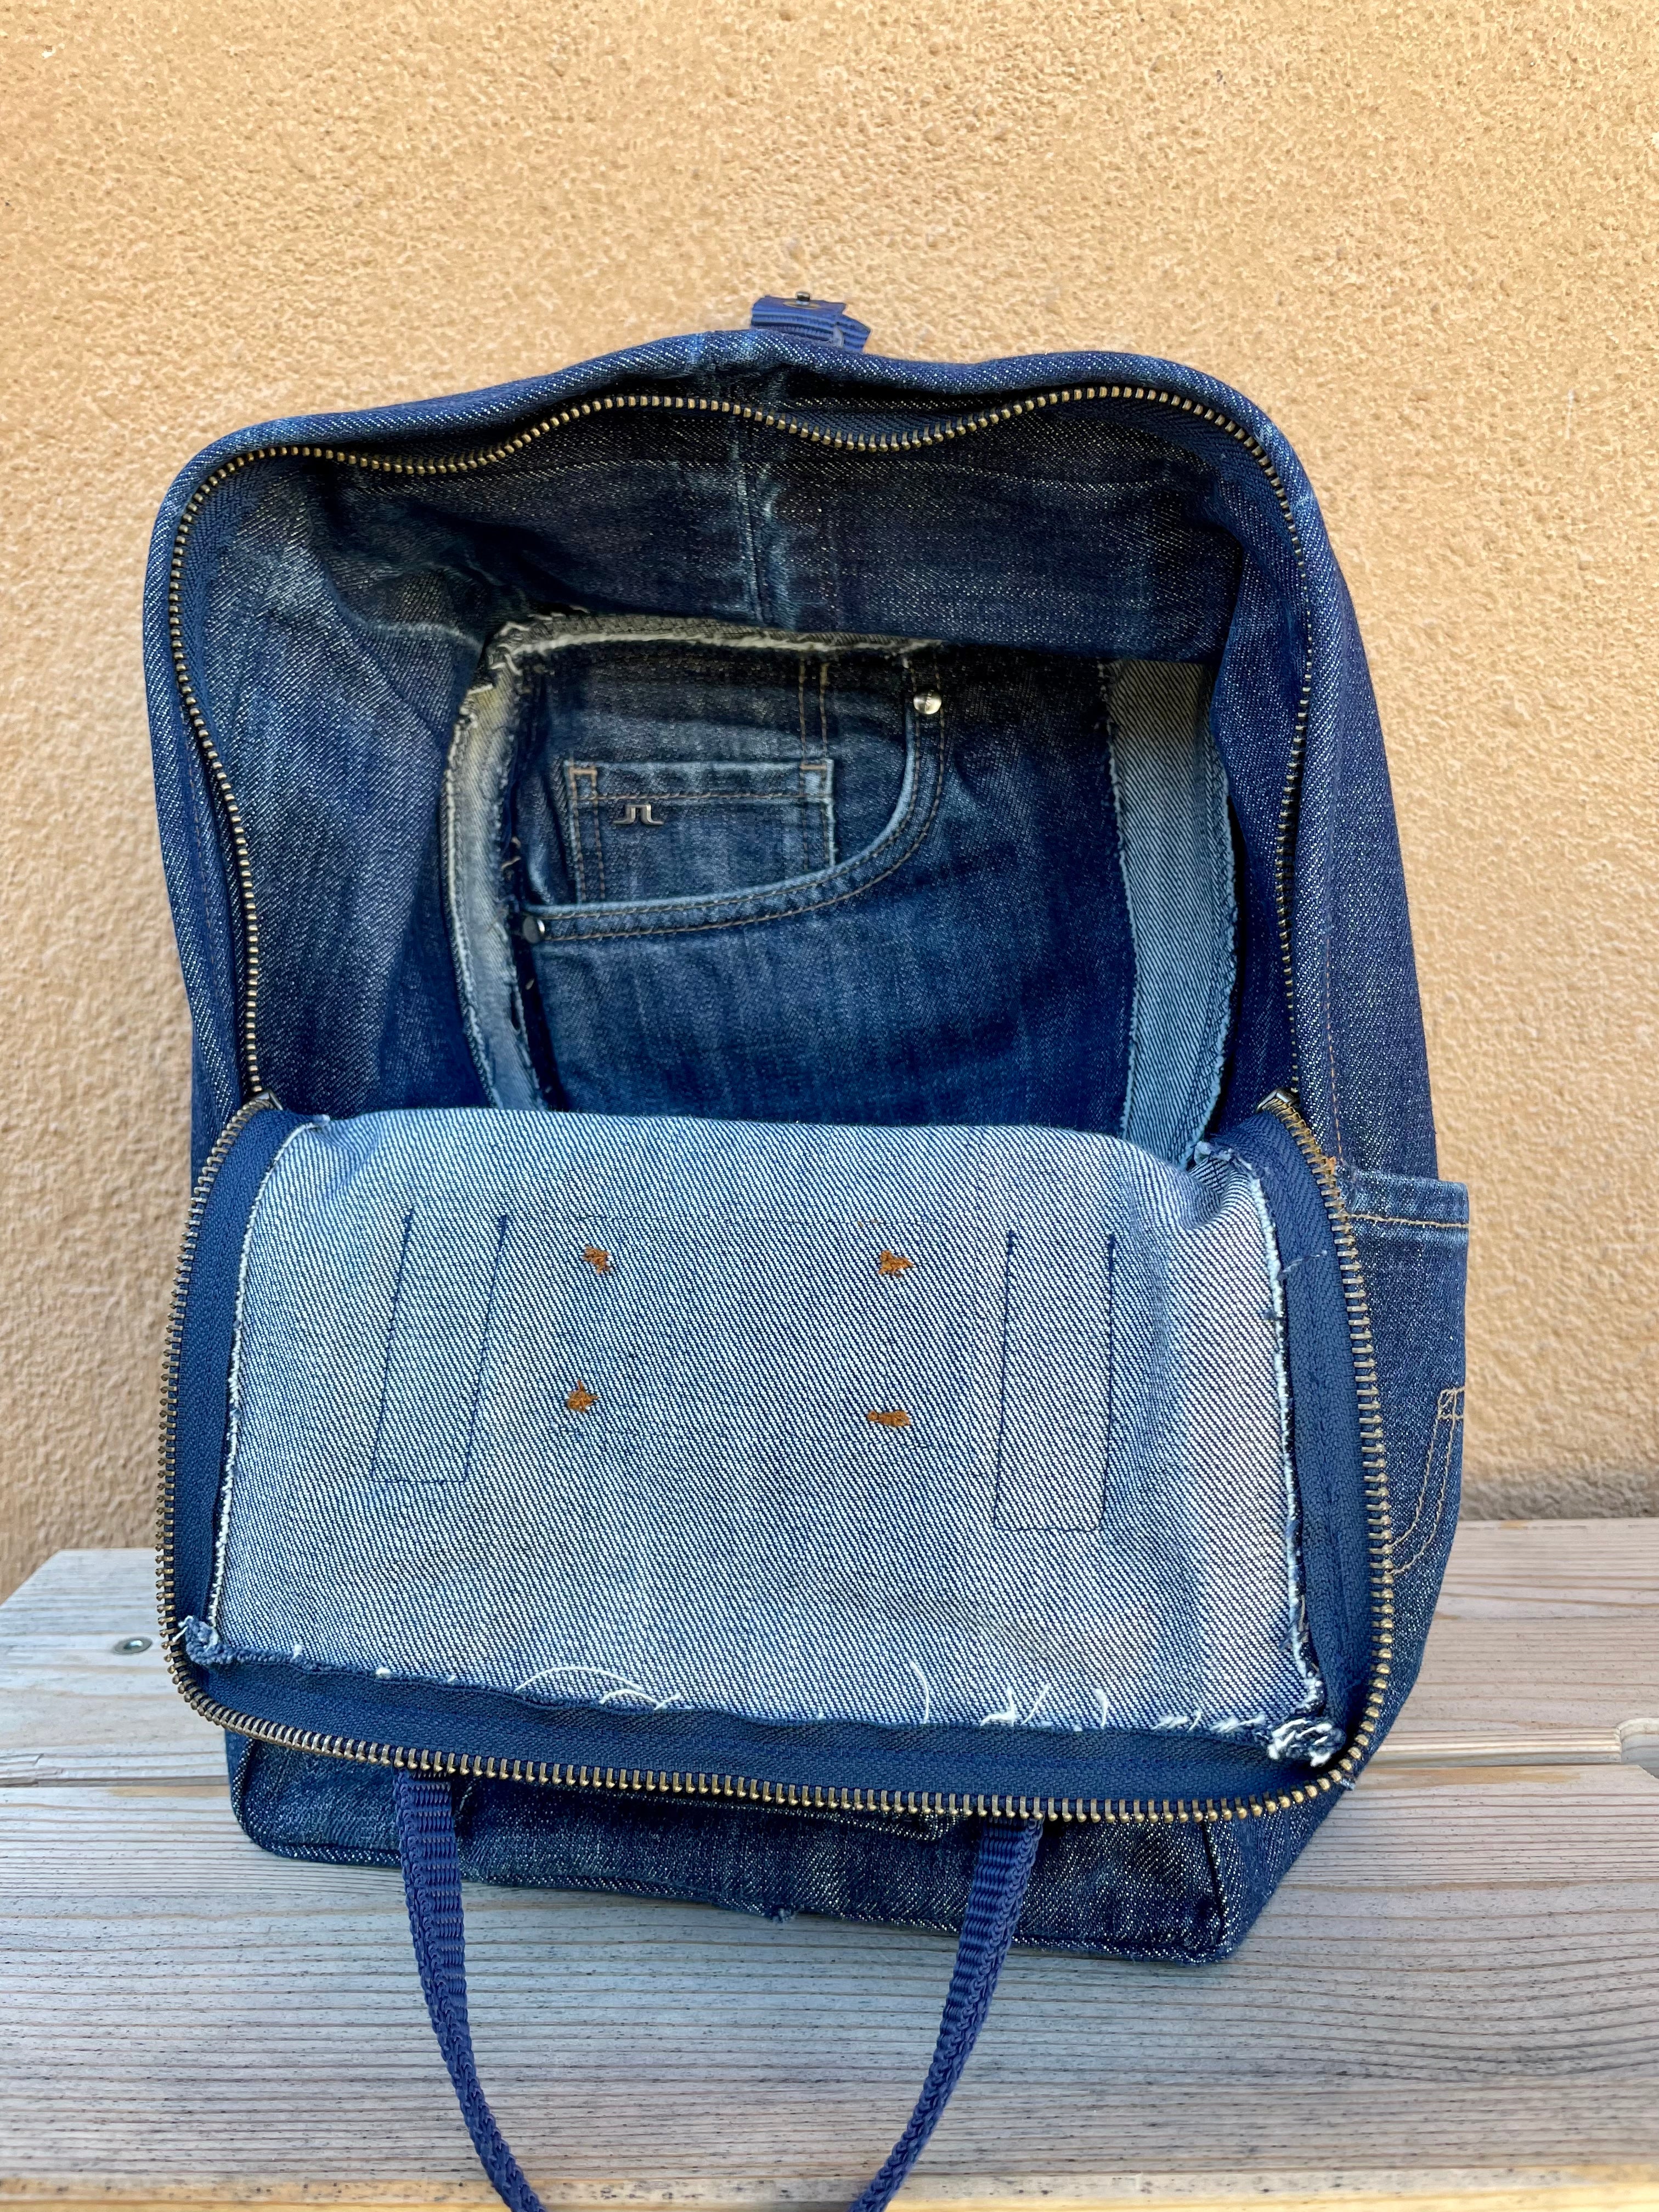 Denim Backpack, Jeans Backpack, Jean Bag, Recycled Jeans, Vintage Bag,  Bohemian Bag, Recycled Jeans Bag, Denim Handbag, Jeans Handbags, Gift - Etsy